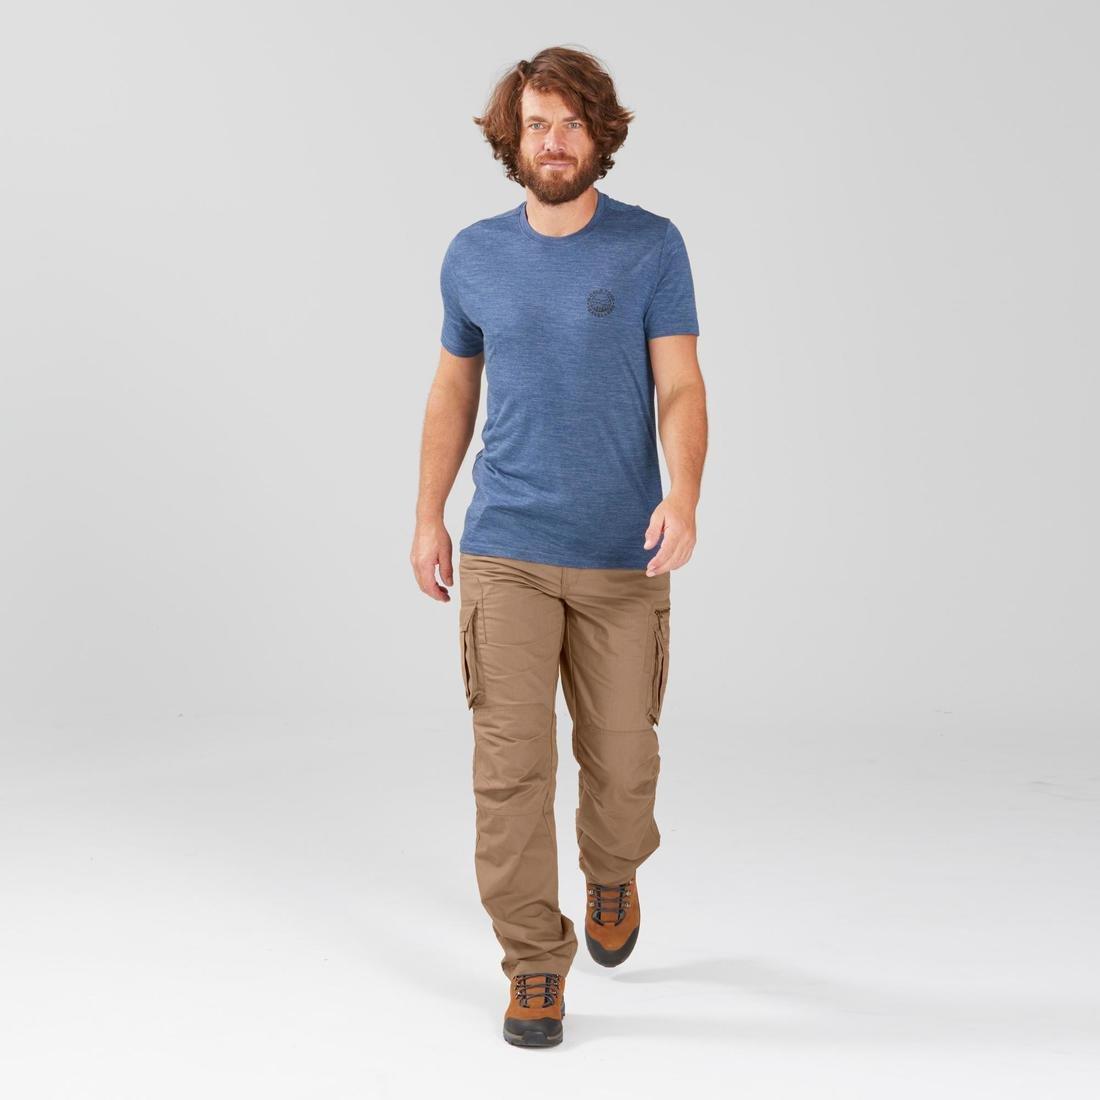 FORCLAZ - Men's travel trekking Merino wool T-shirt - TRAVEL 100, Carbon Grey